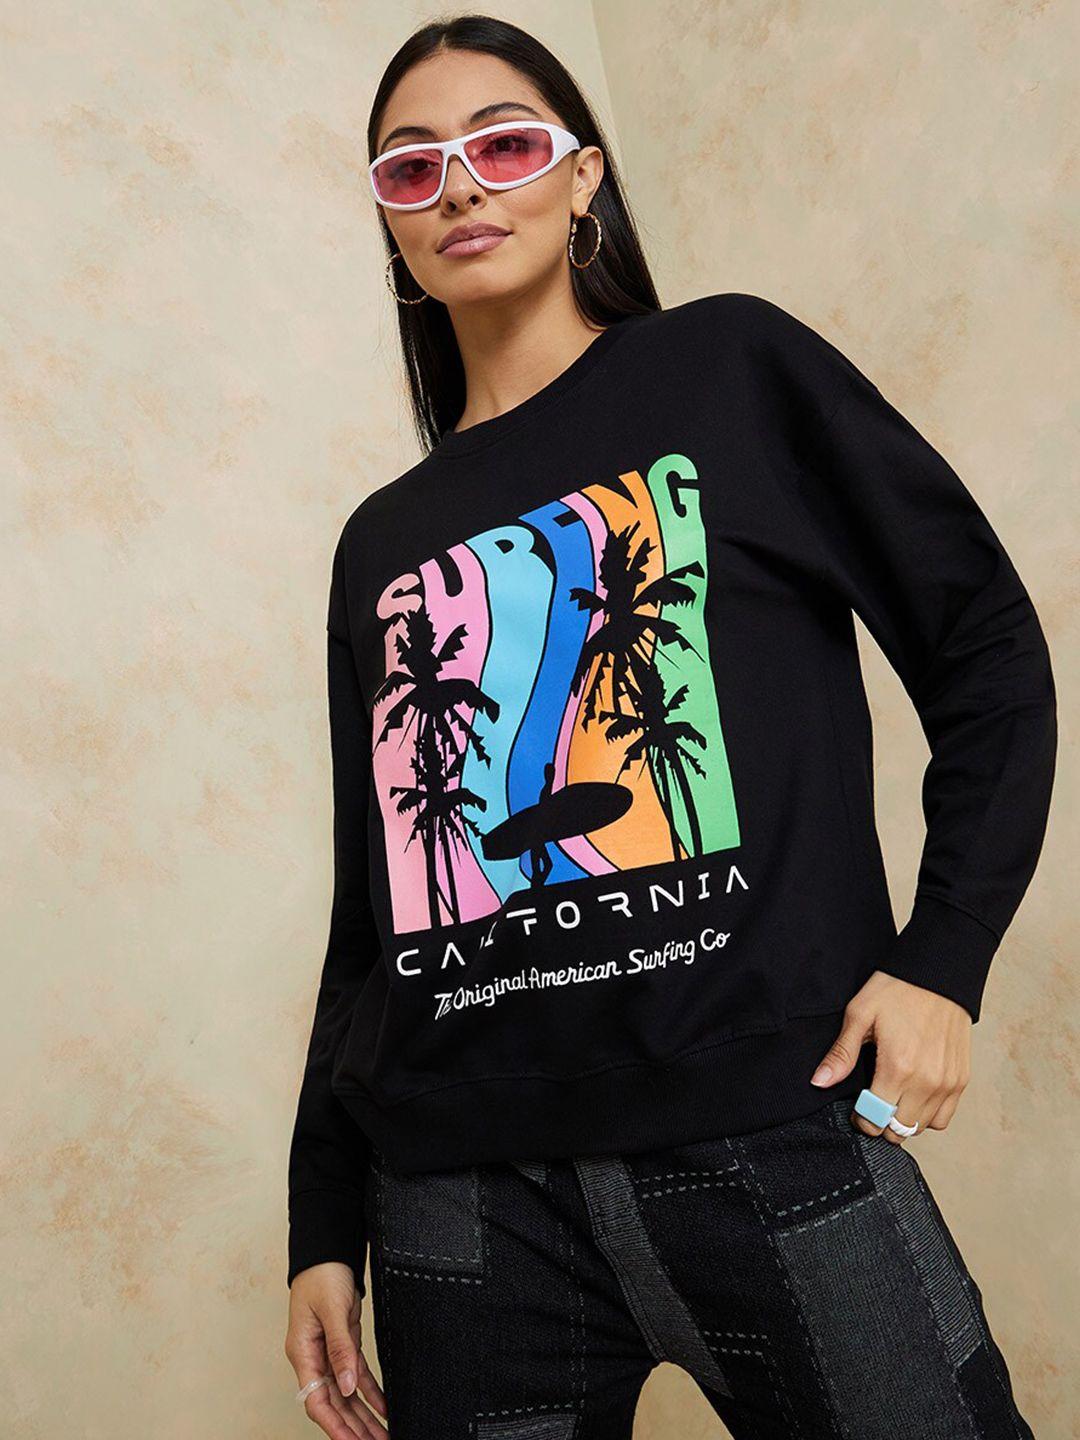 styli-women-black-graphic-printed-sweatshirt